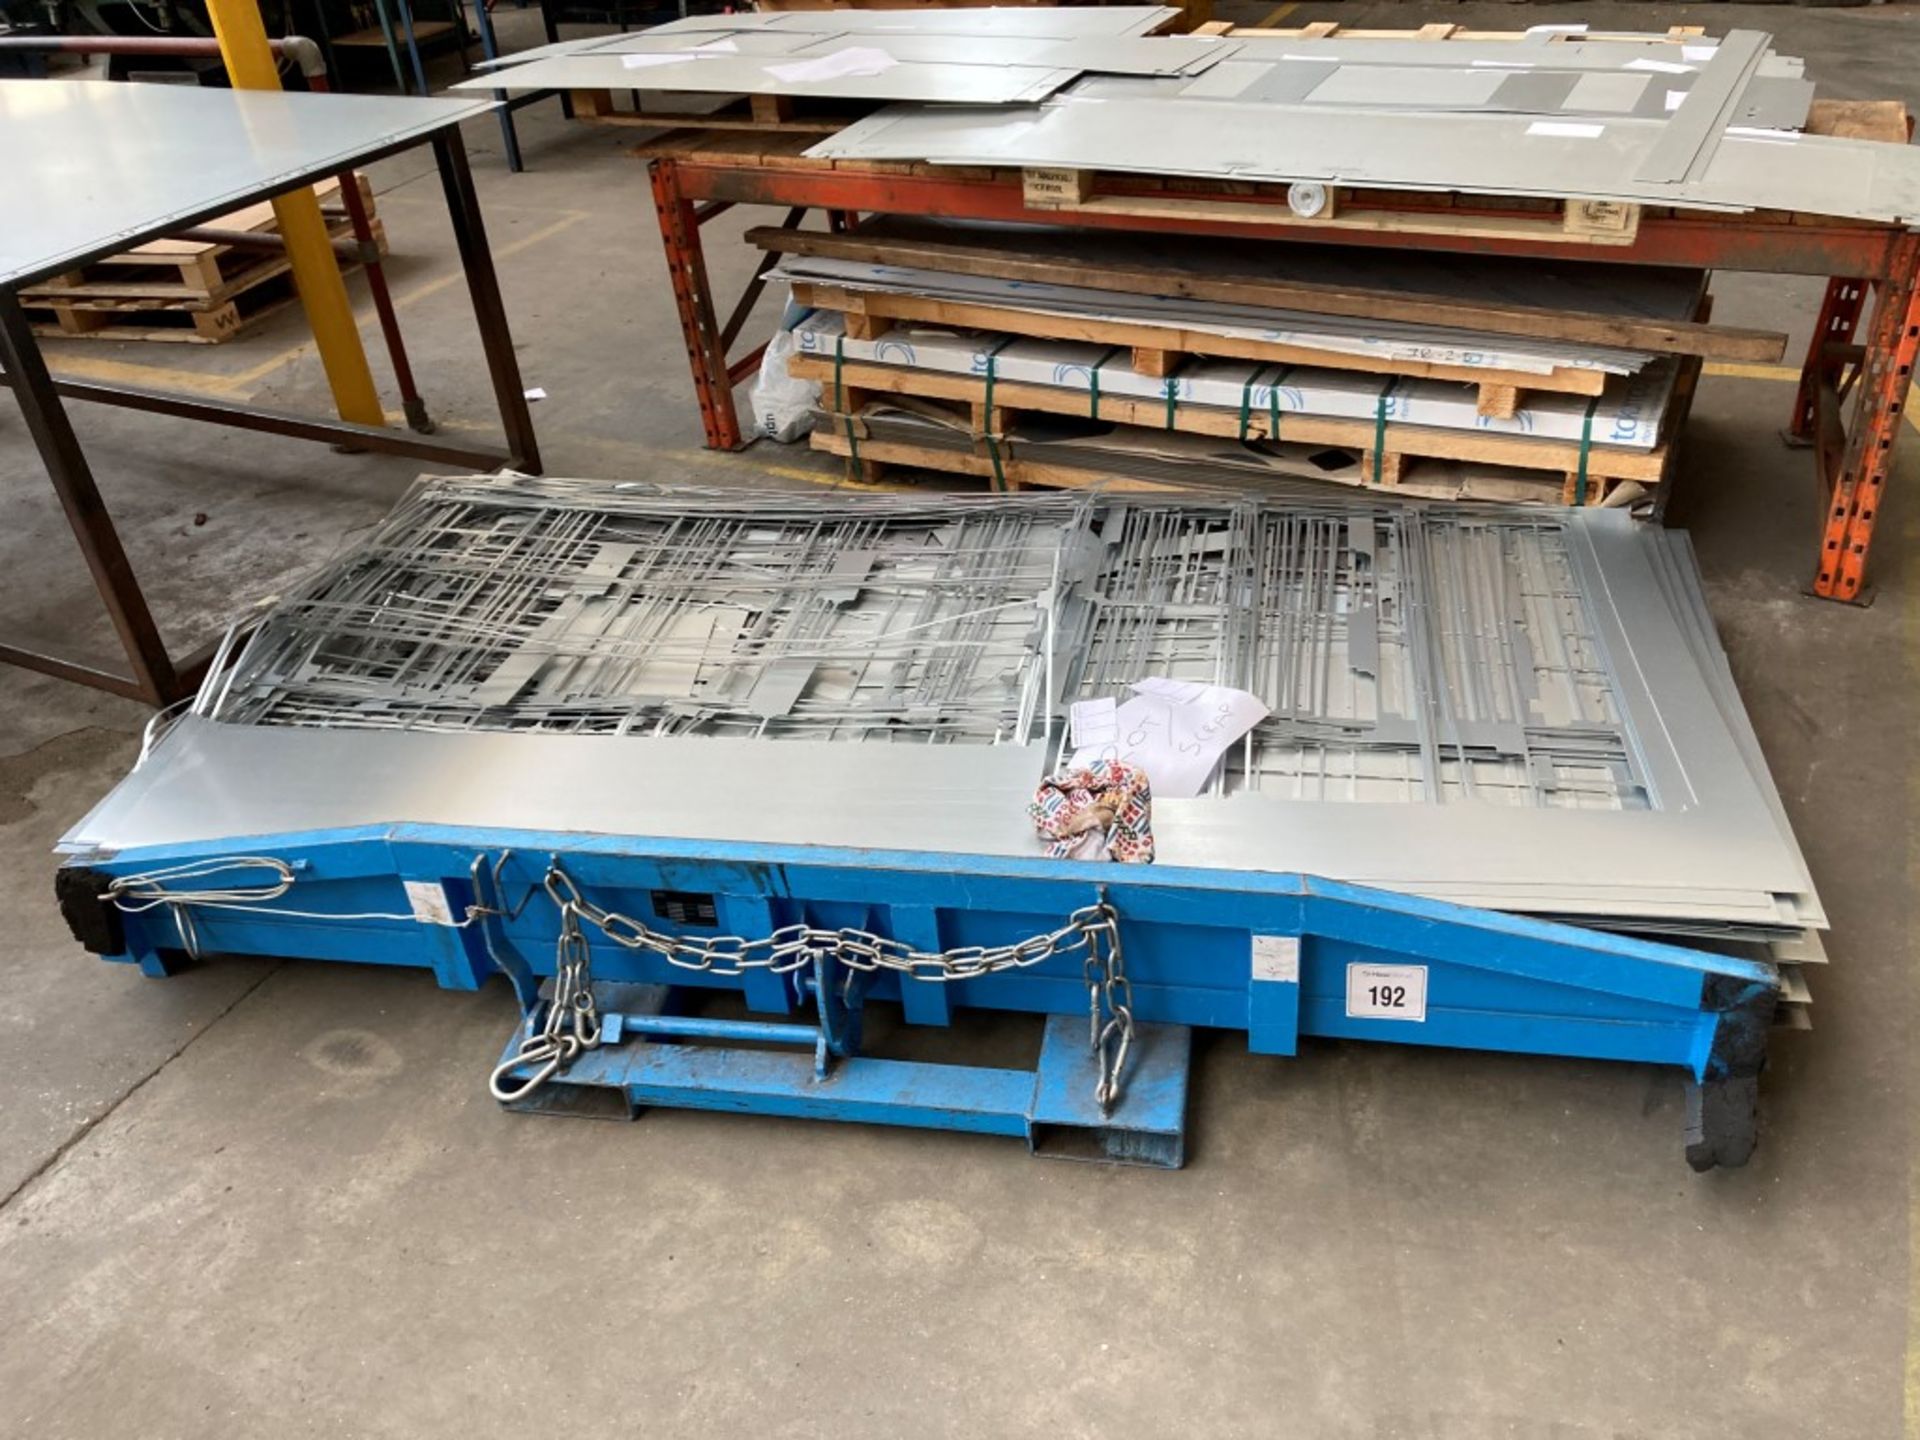 Bauer RGP-1 Skeleton tipping skip 2000kg capacity, Serial Number: 778635, Year of Manufacture: 2019